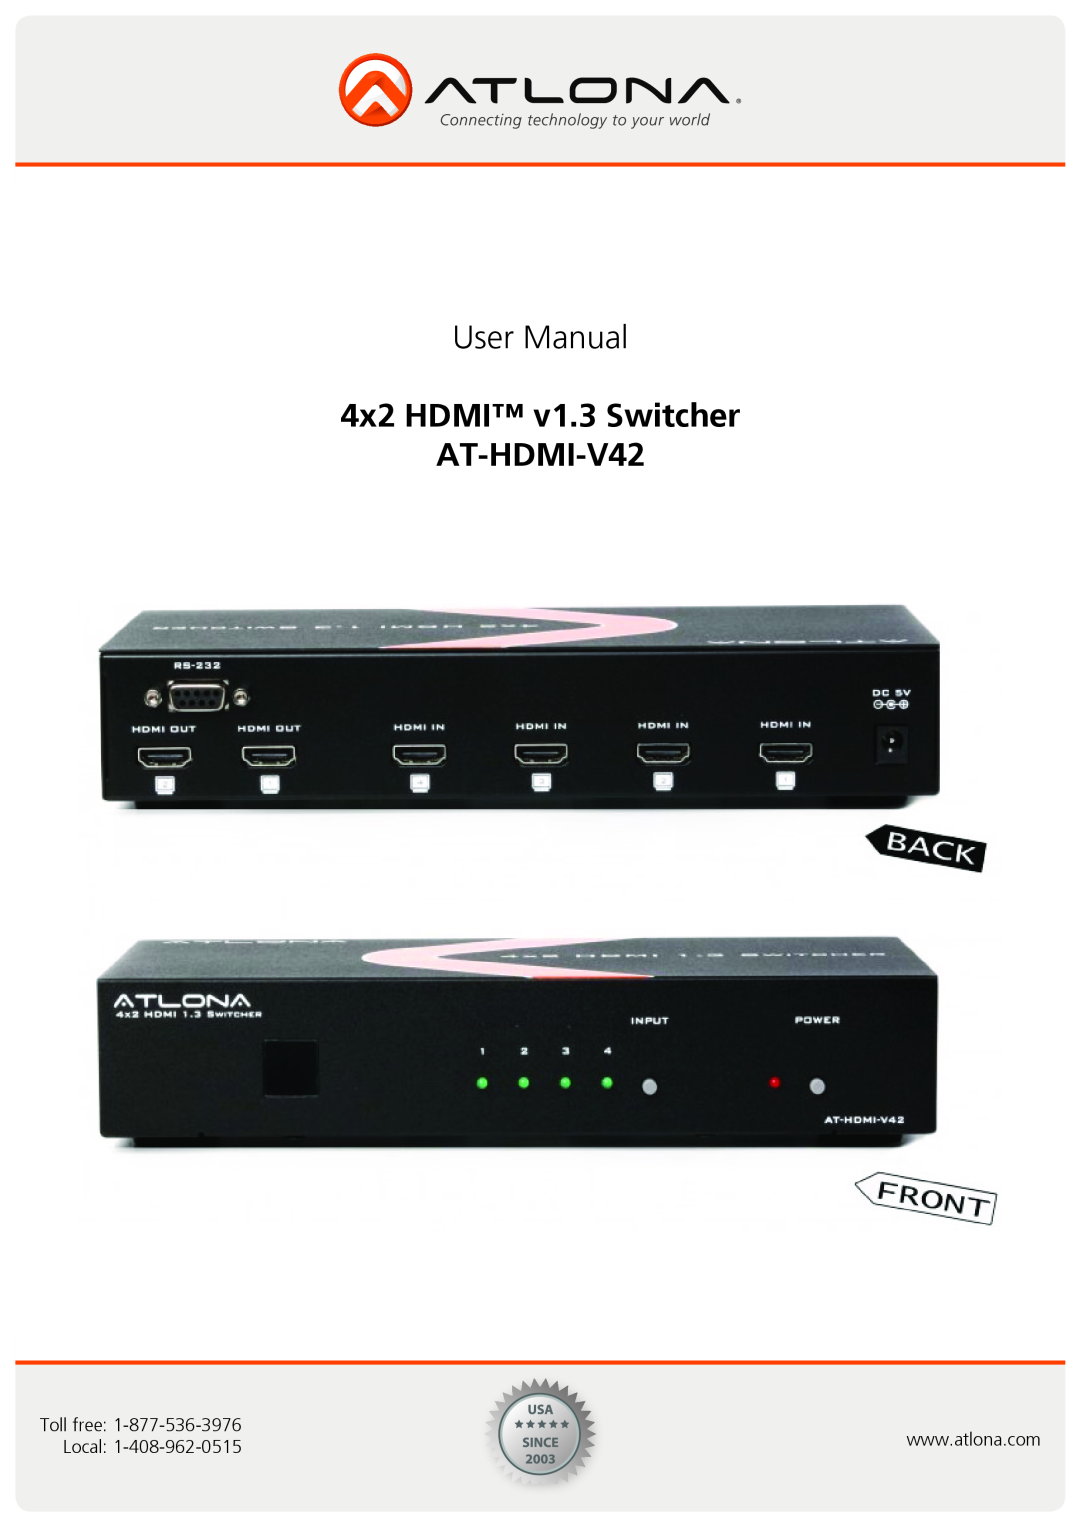 Atlona user manual 4x2 HDMI v1.3 Switcher AT-HDMI-V42, Toll free, Local 